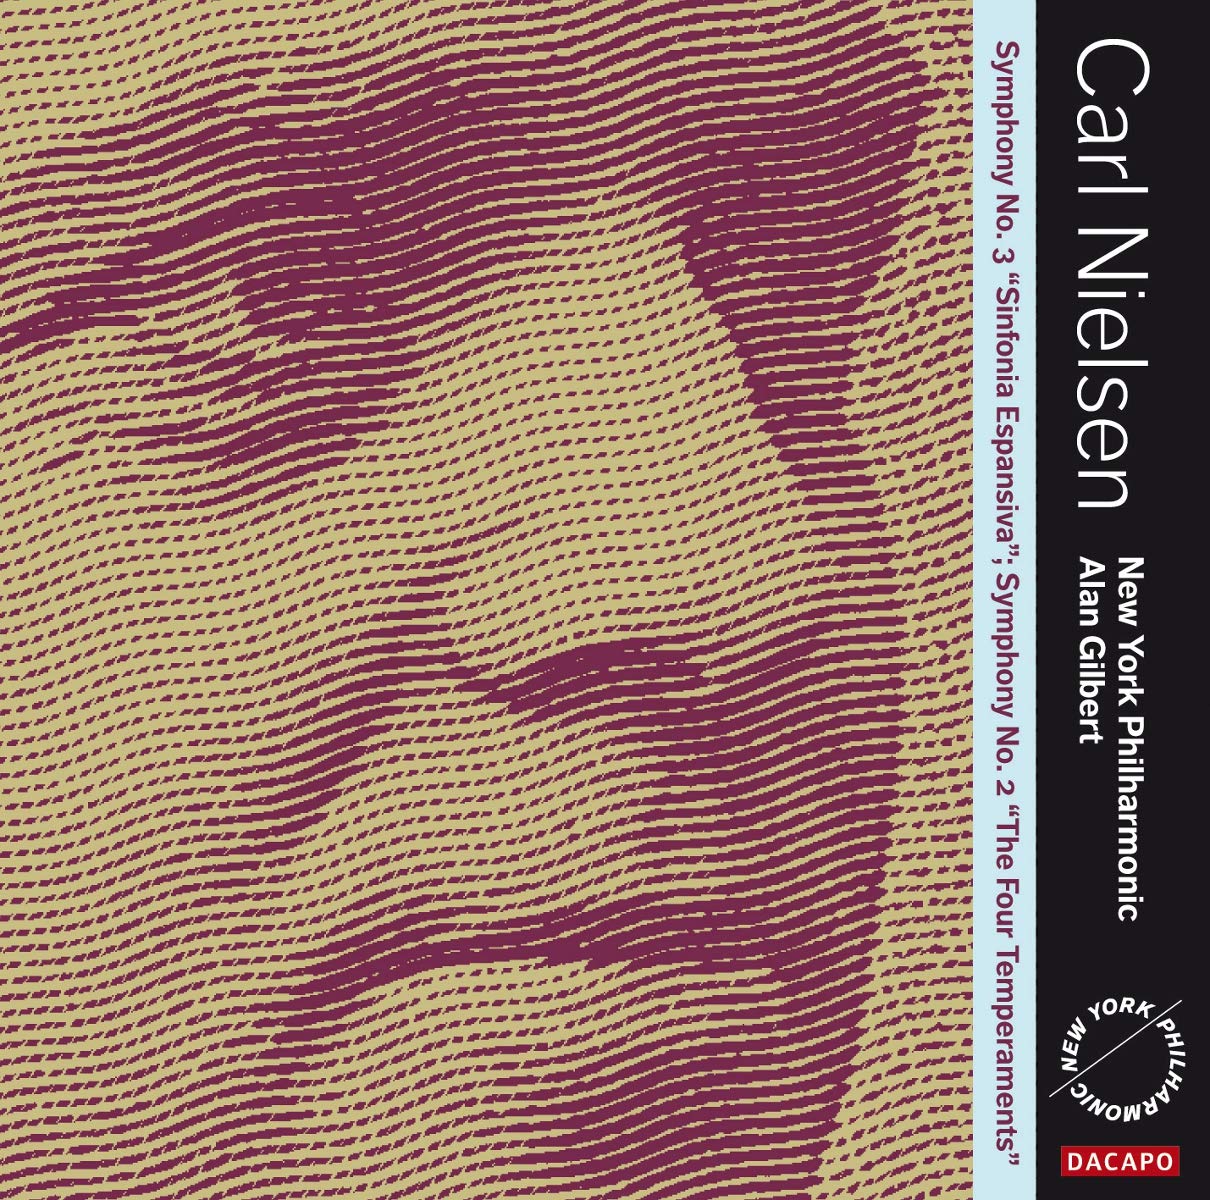 Nielsen- Symphonies No.2 & No. 3 (Alan Gilbert, Conductor) (SACD) - Darkside Records